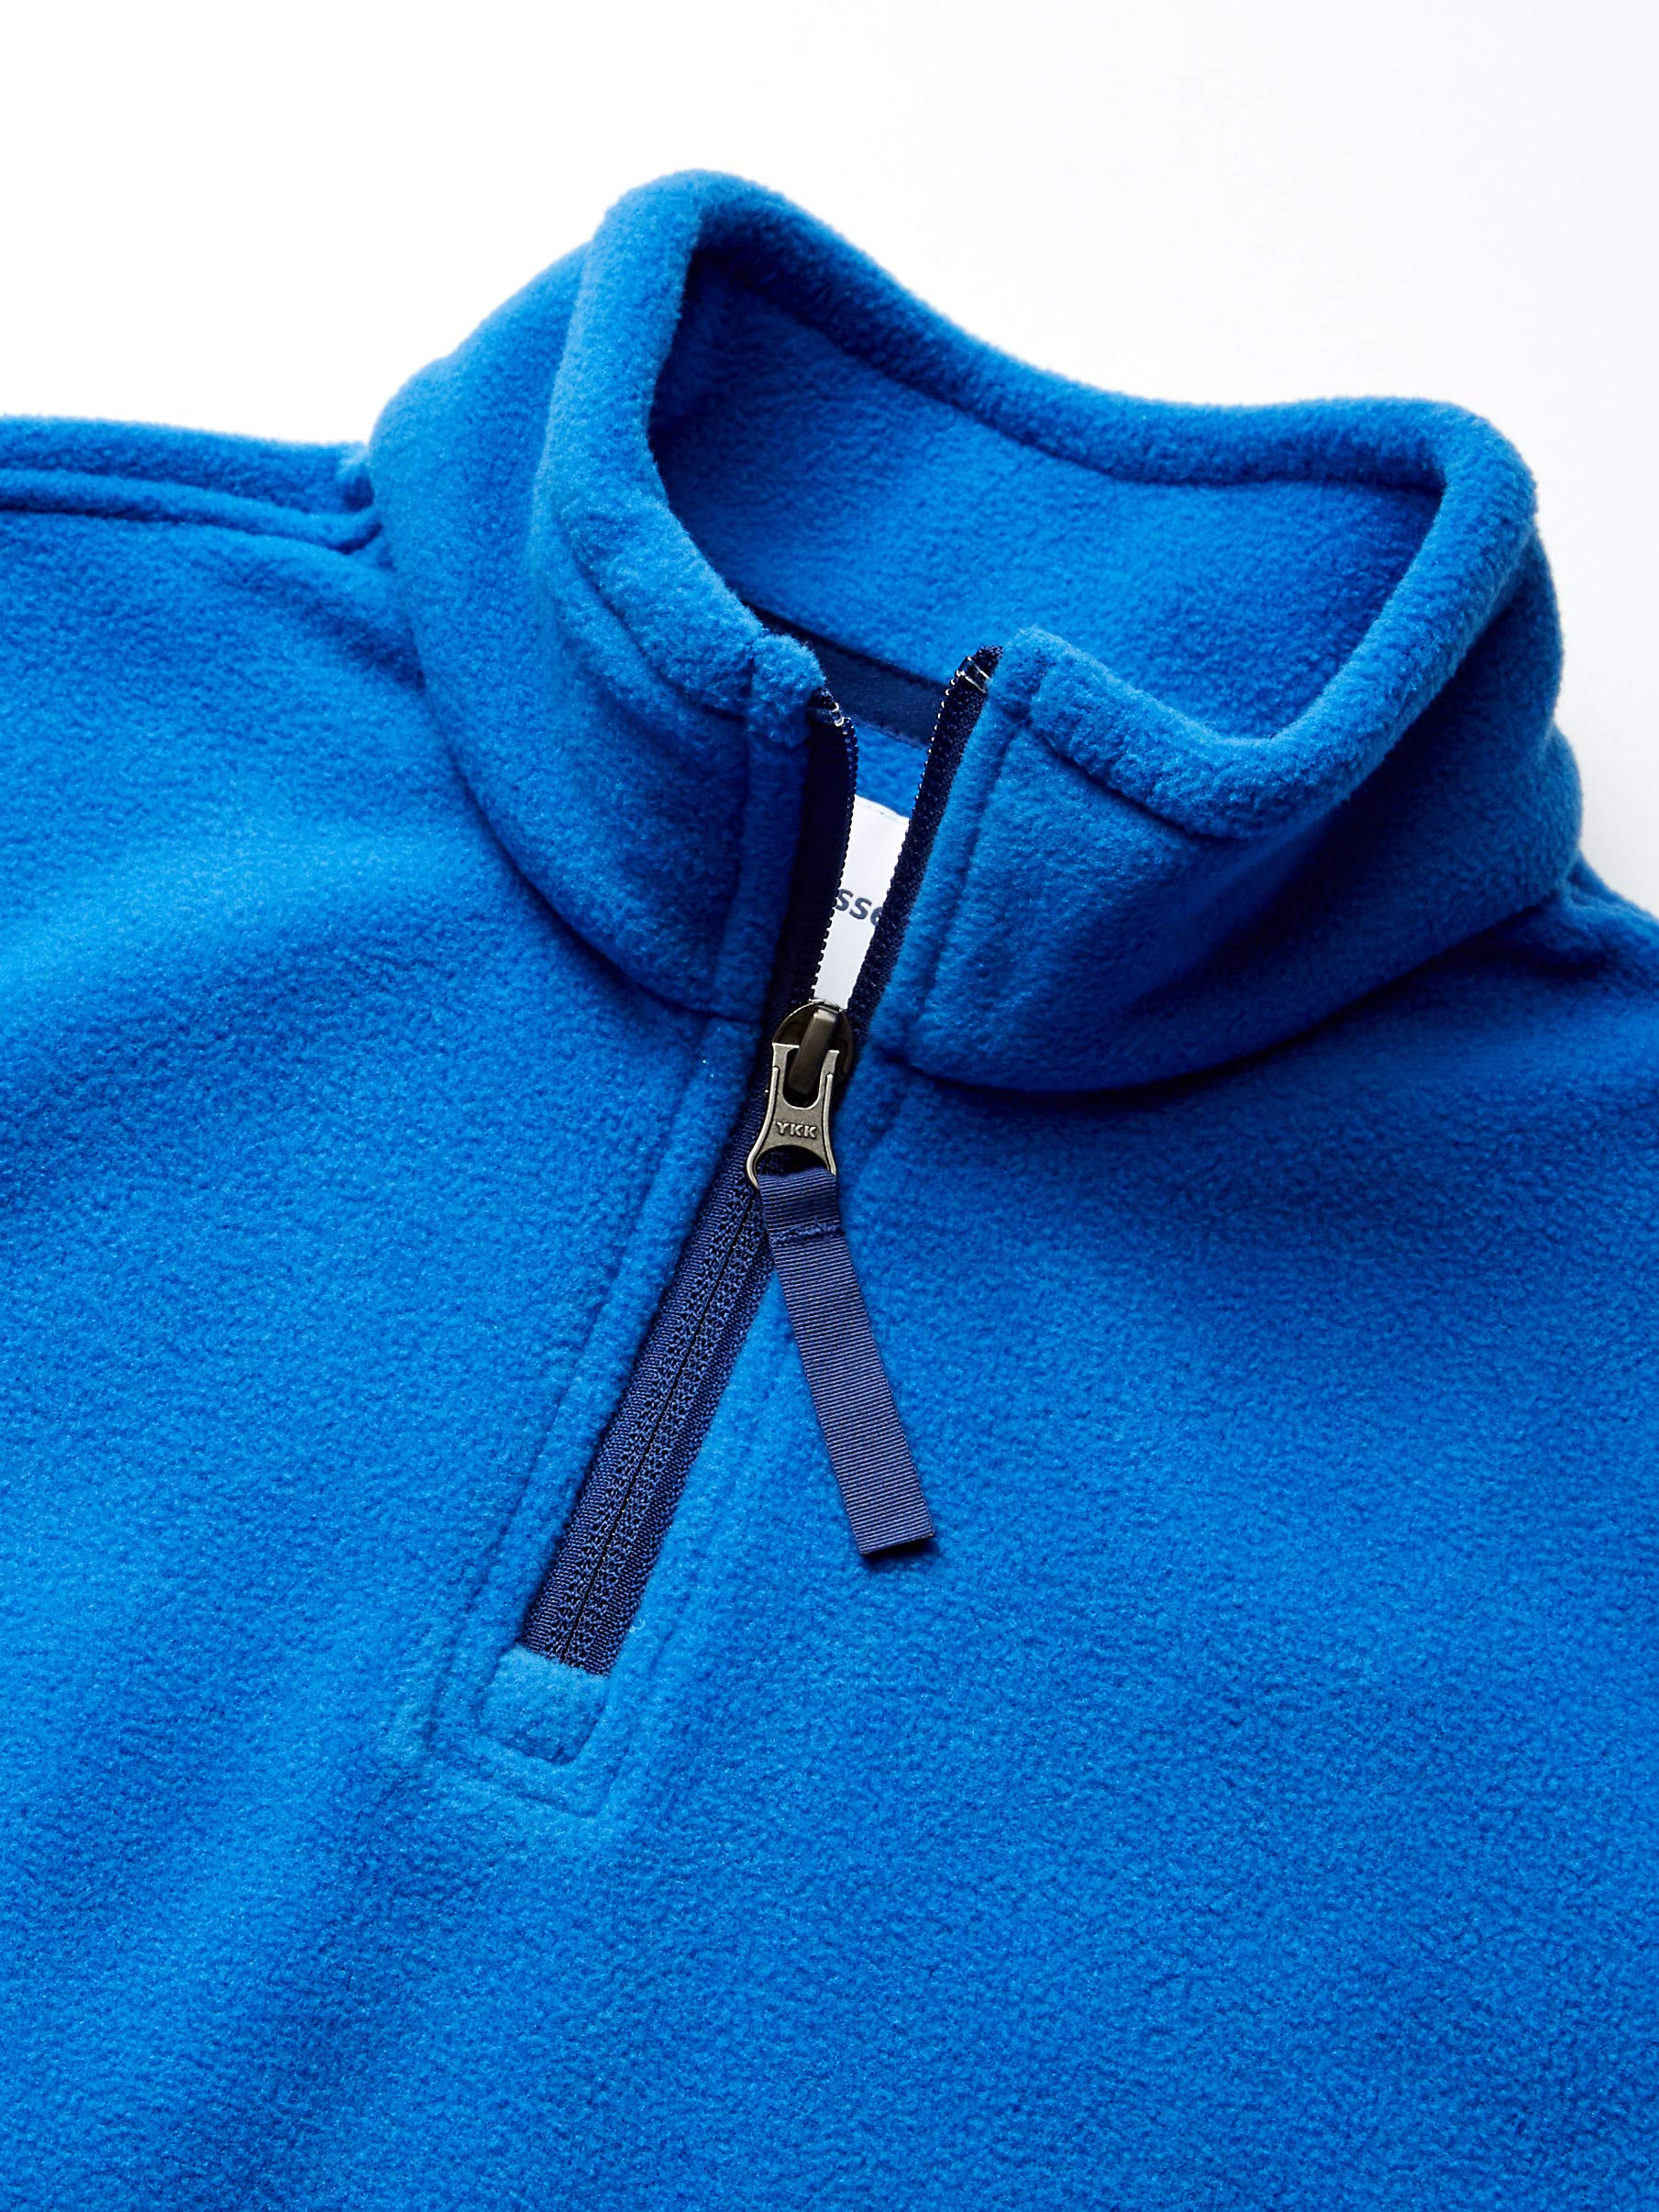 Amazon Essentials Boys and Toddlers' Polar Fleece Quarter-Zip Pullover Jacket